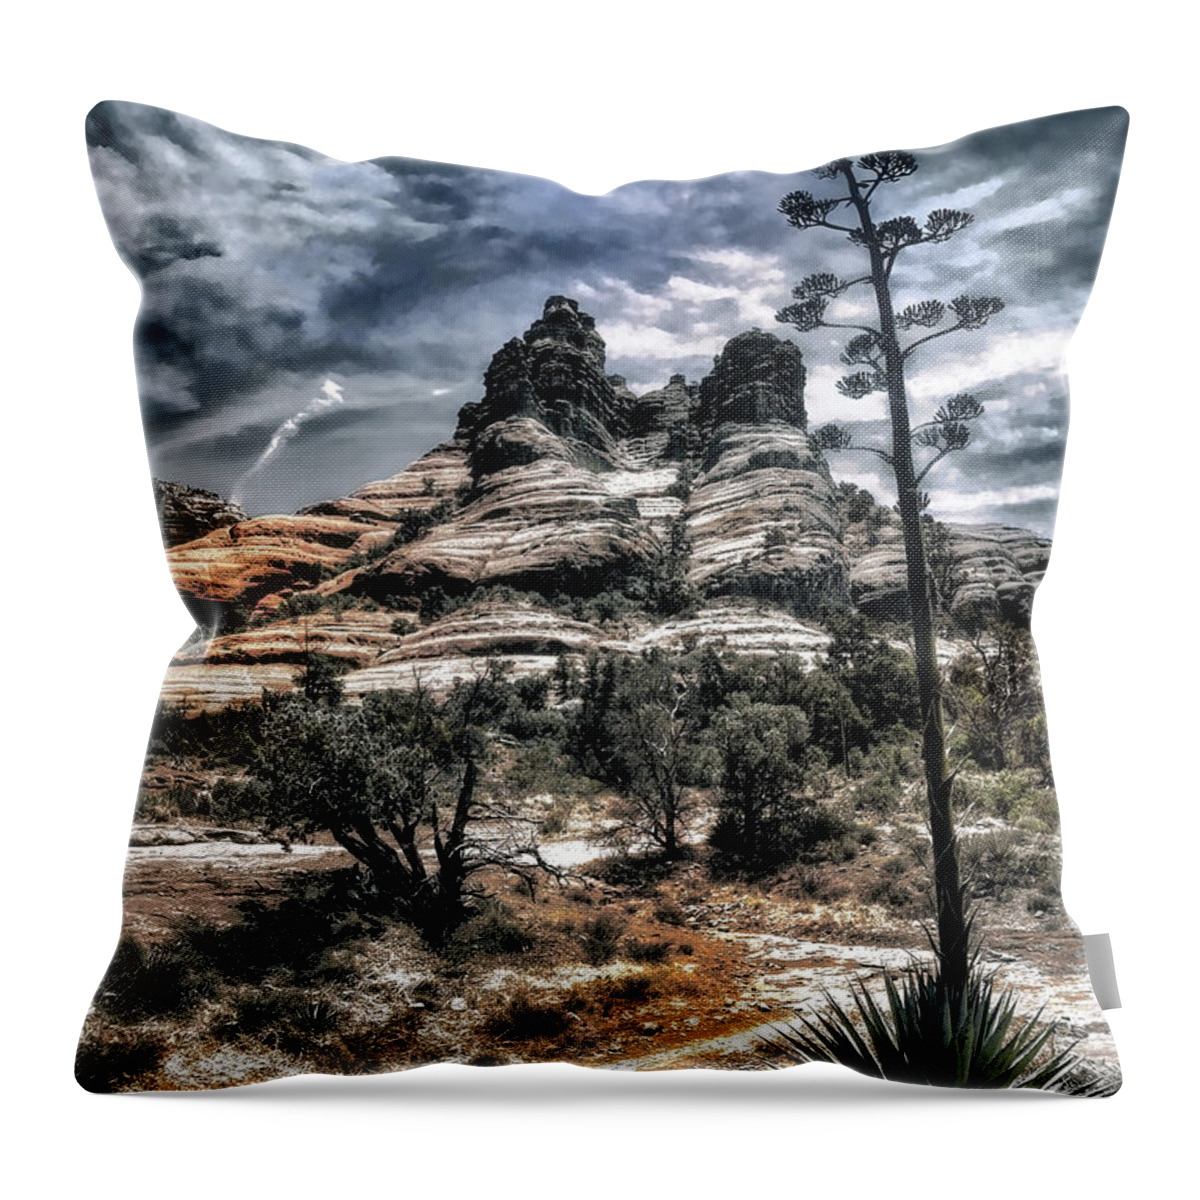 Desert Throw Pillow featuring the photograph Vortex by Jim Hill